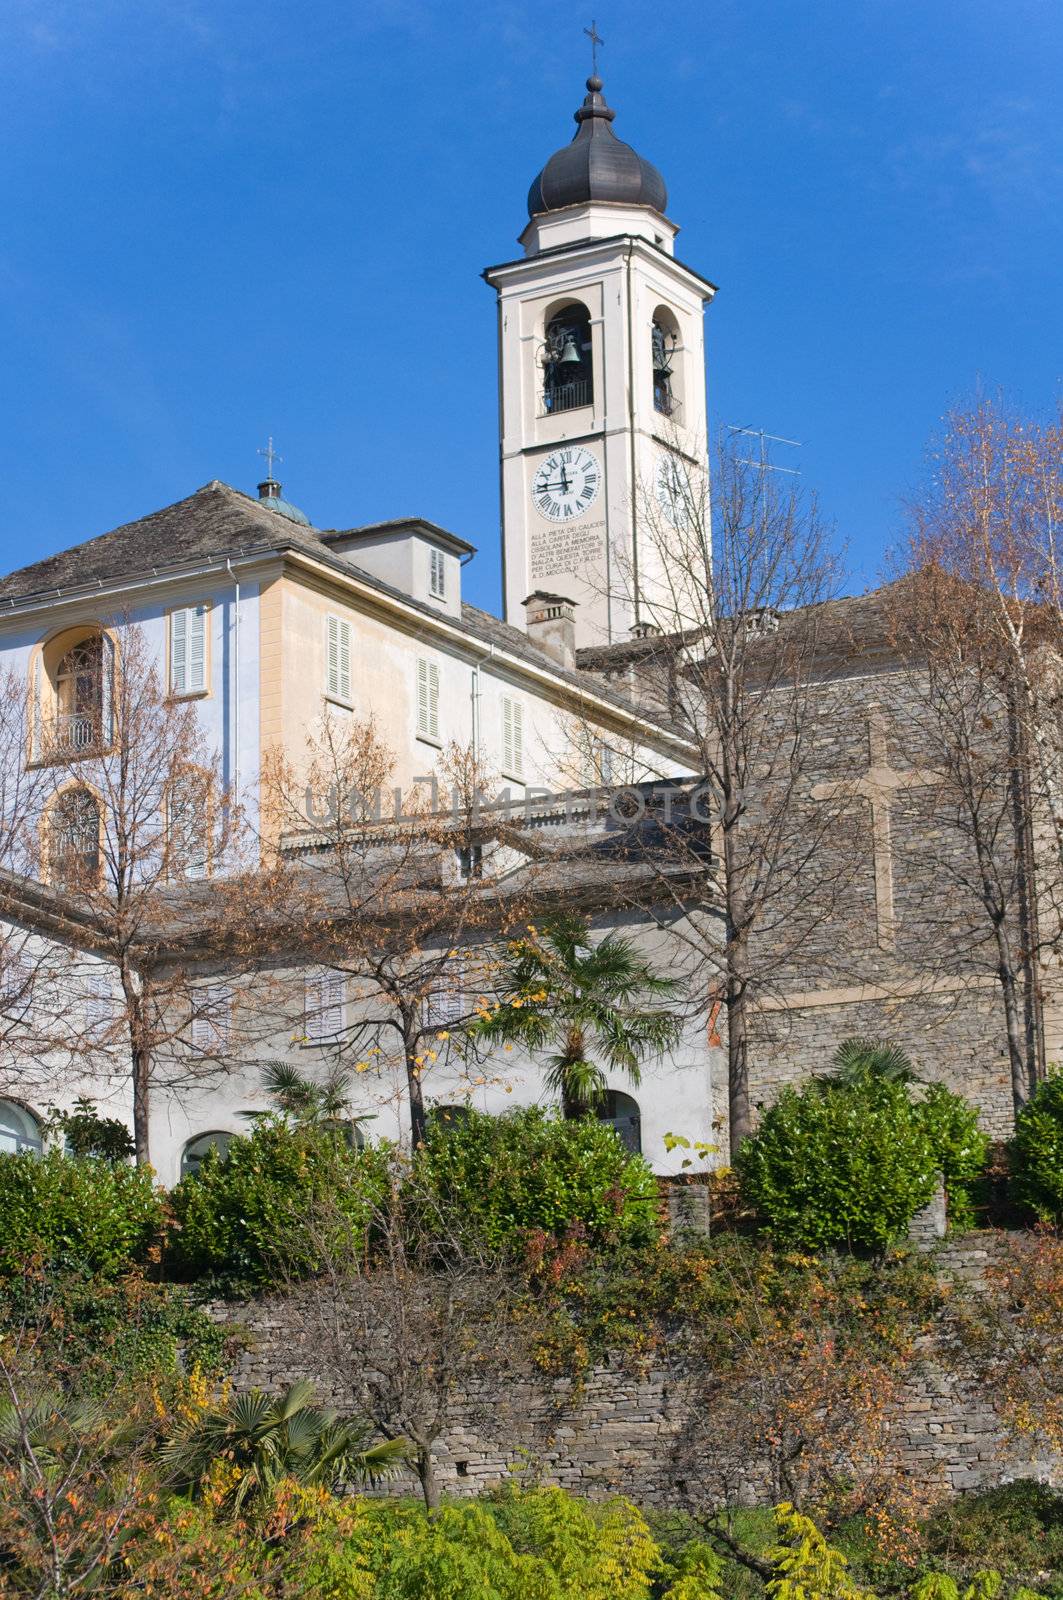 Italian church with surrounding garden